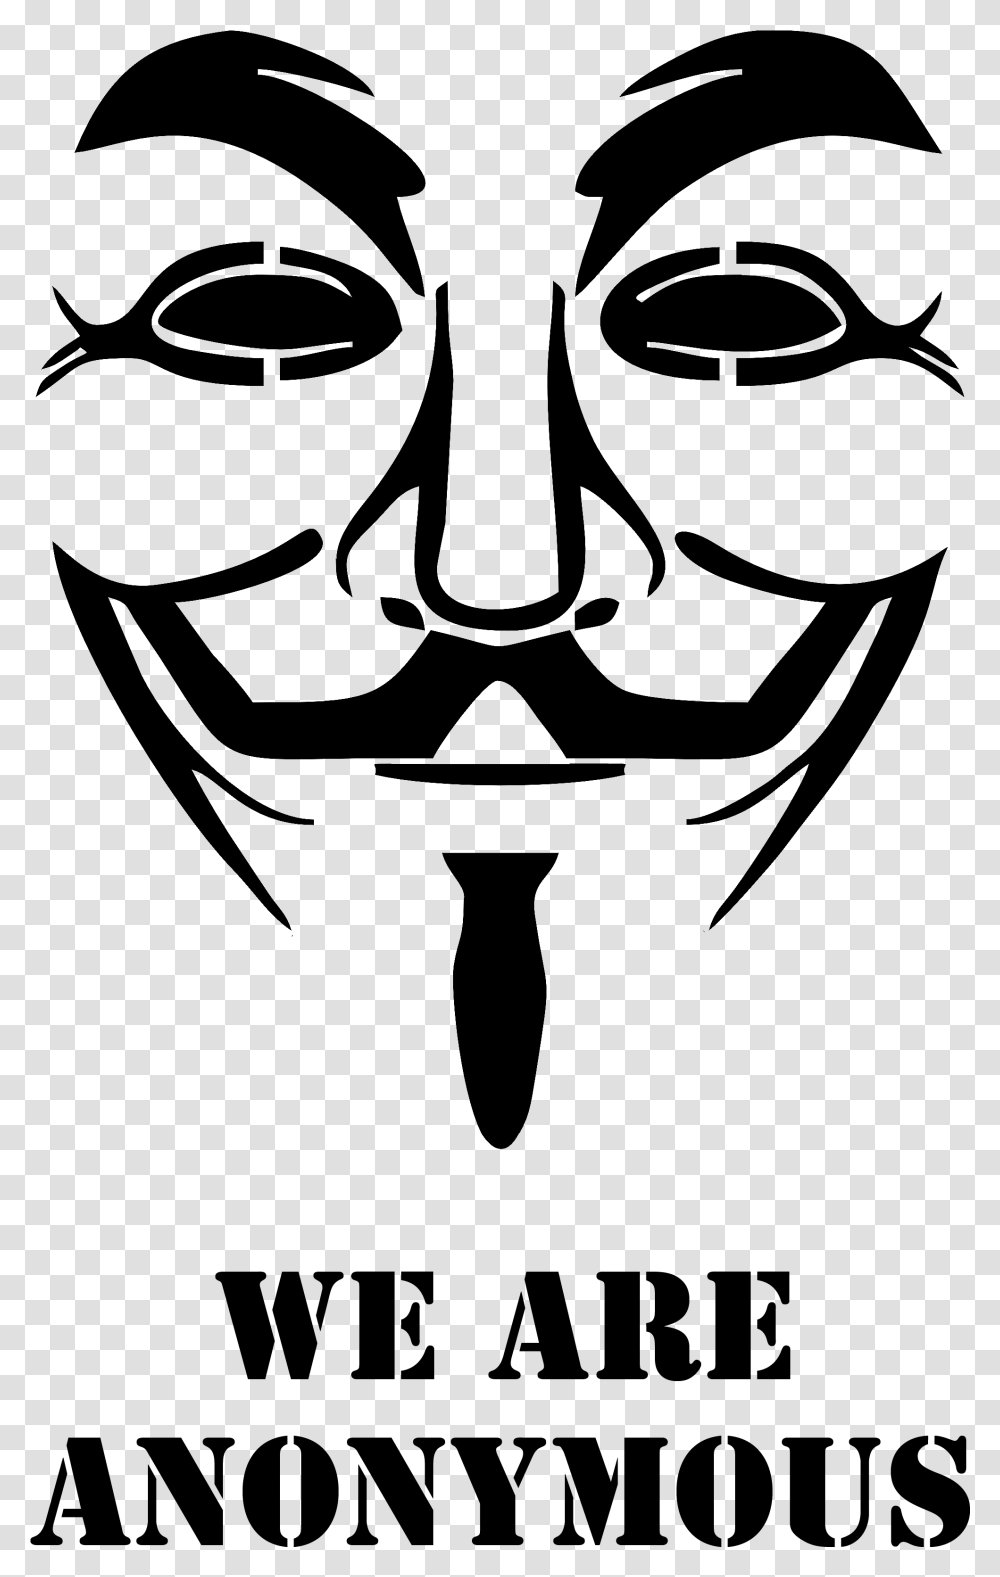 Anonymous Mask Pnganonymous Mask Anonymous Mask, Gray, World Of Warcraft Transparent Png